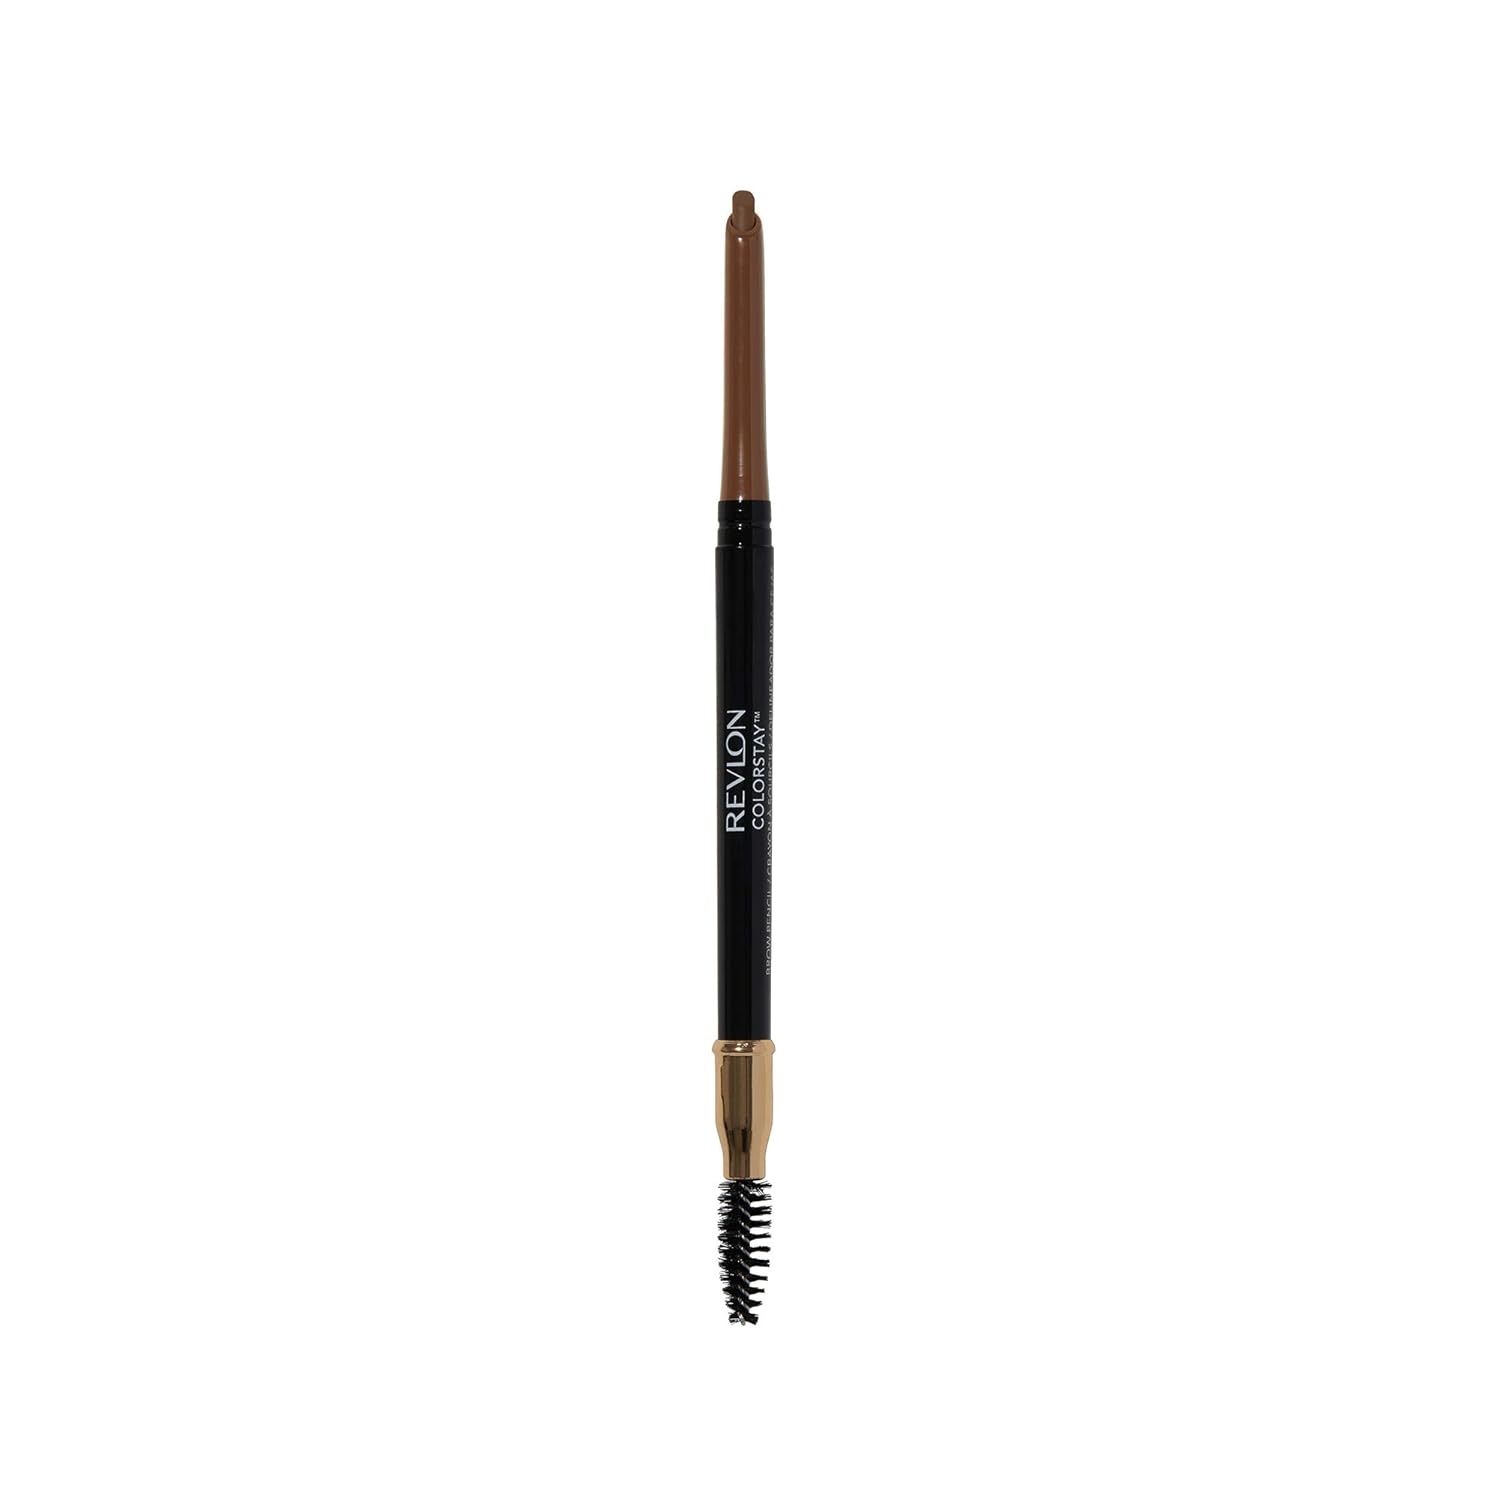 Revlon Eyebrow Pencil, Colorstay Eye Makeup with Eyebrow Spoolie, Waterproof, Longwearing Angled Precision Tip, 210 Soft Brown, 0.01